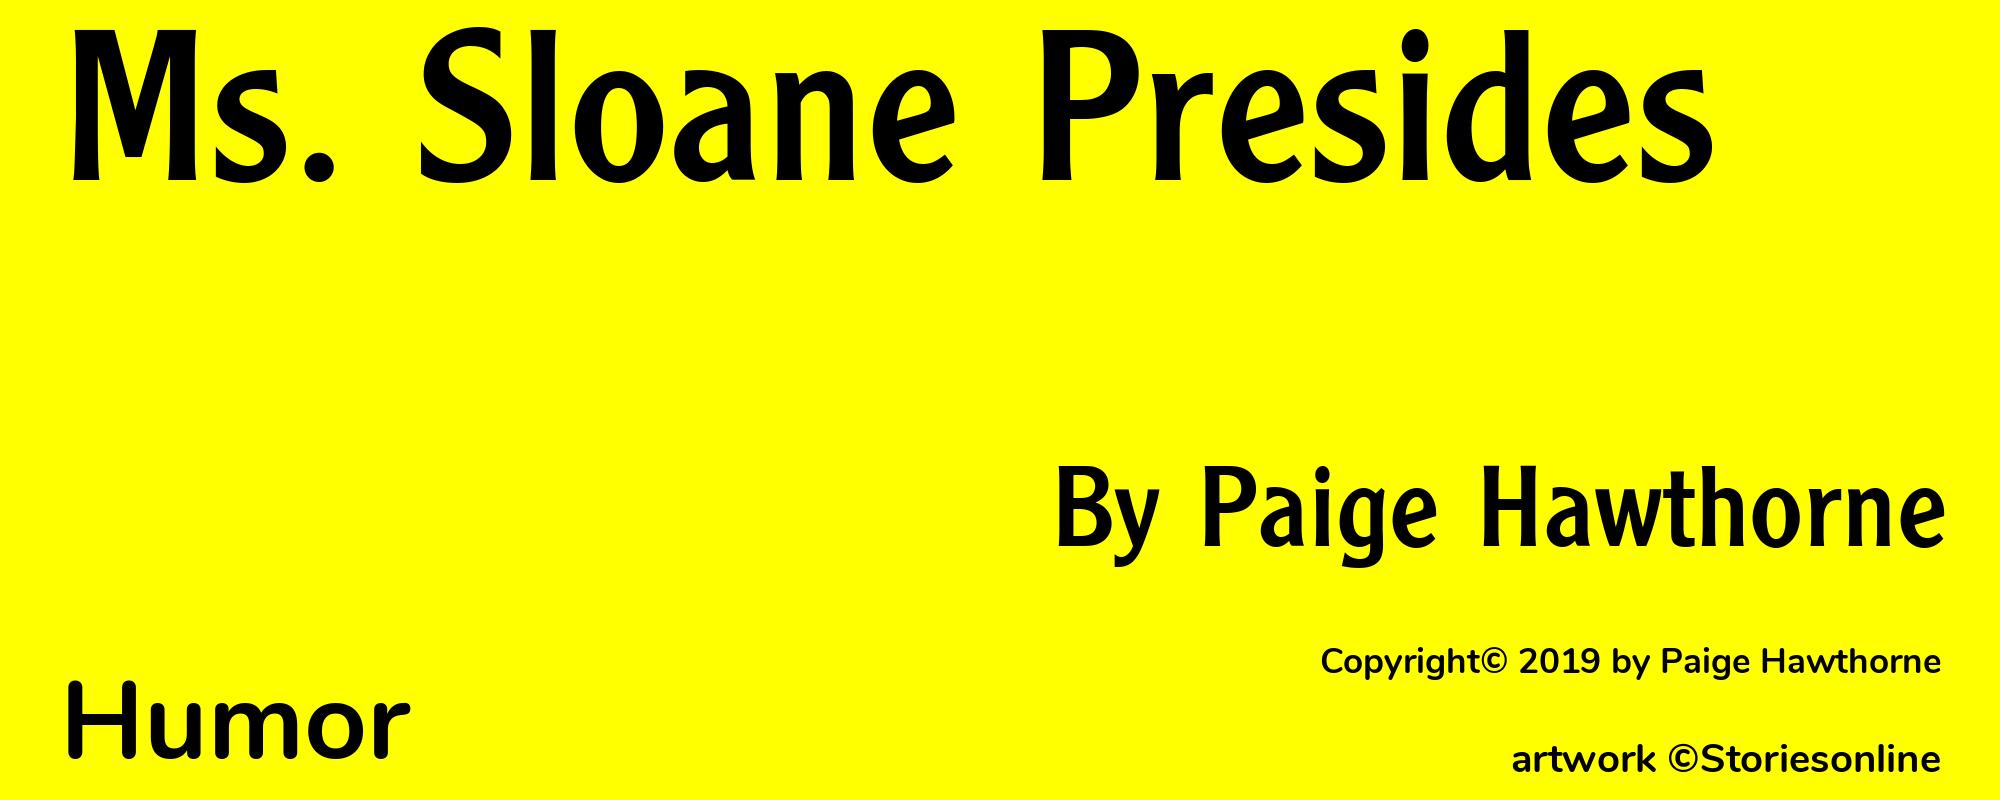 Ms. Sloane Presides - Cover